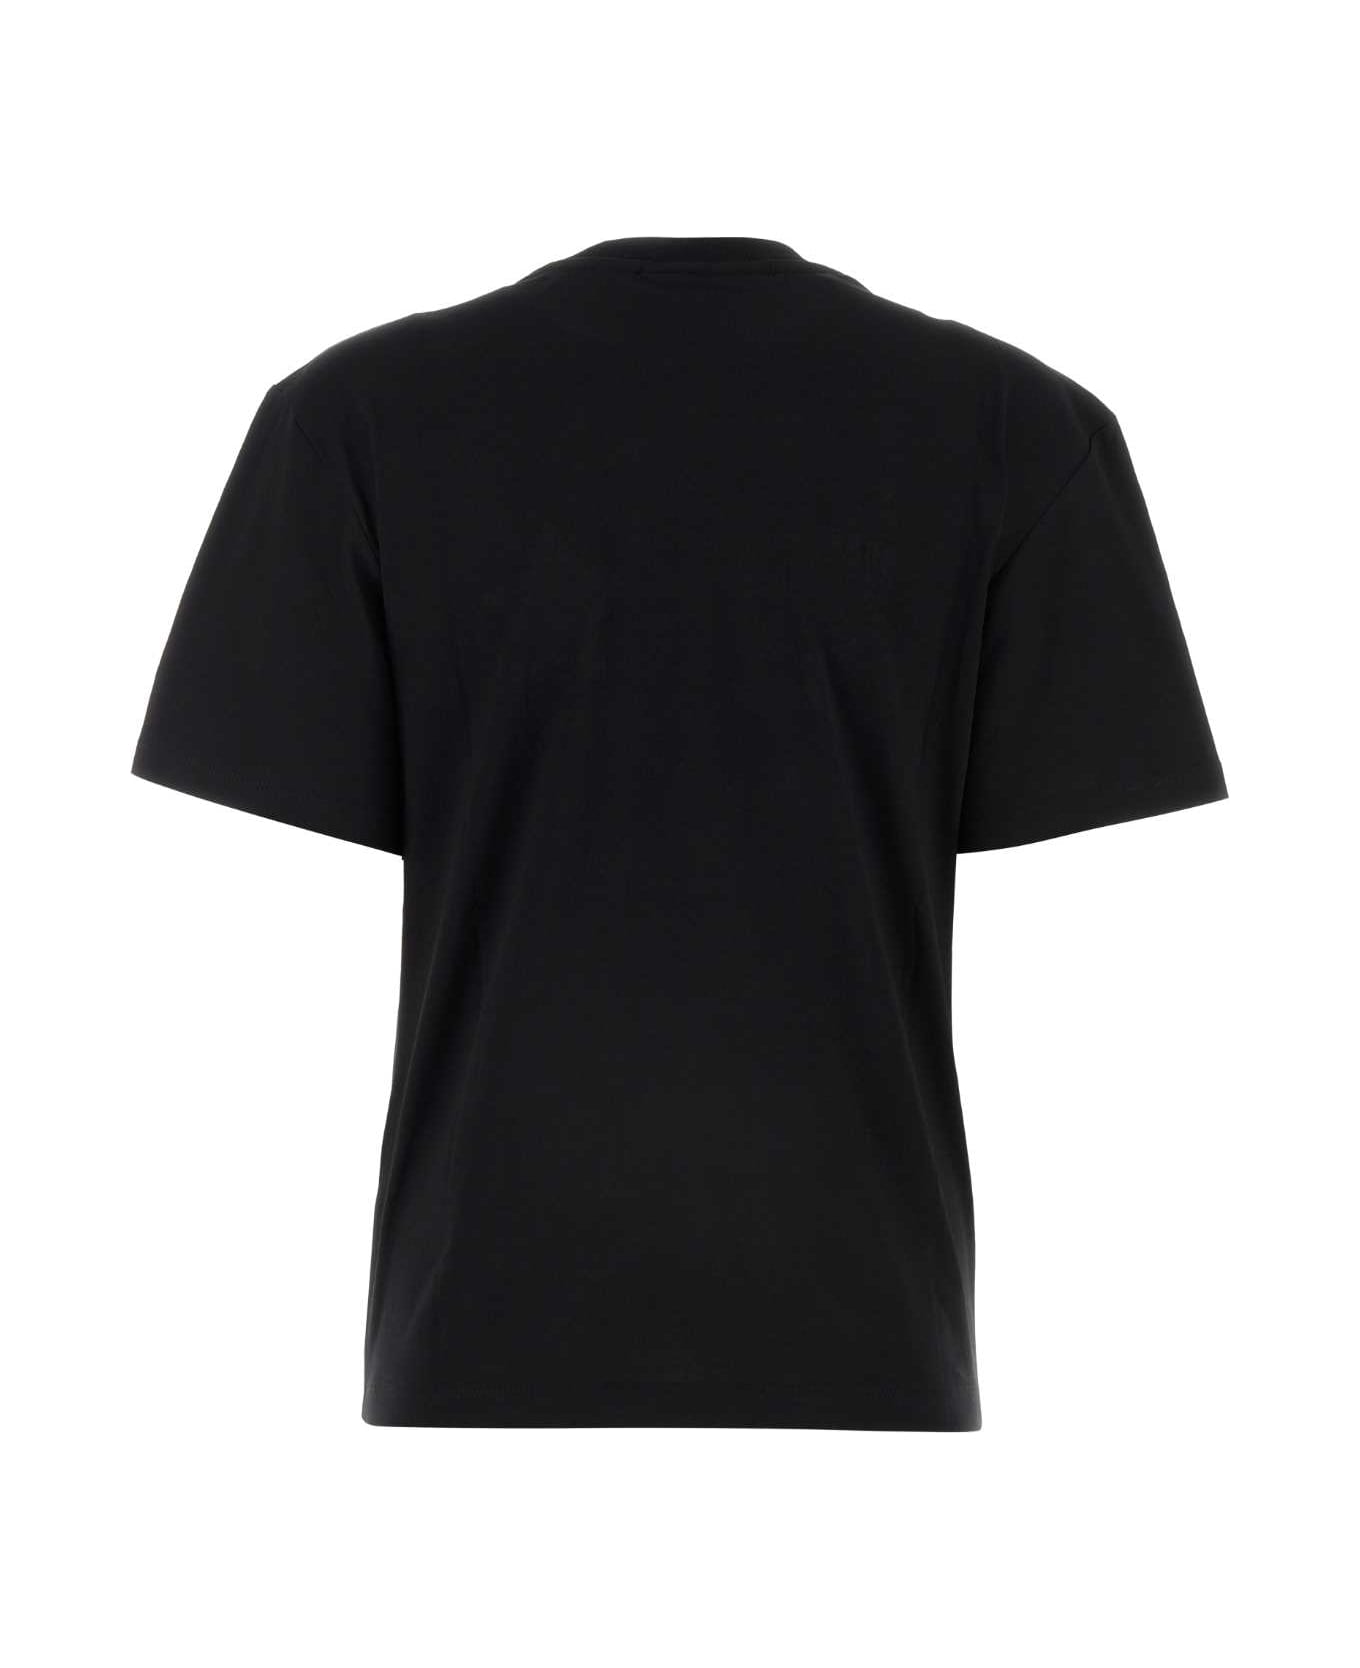 Chiara Ferragni Black Cotton T-shirt - Black Tシャツ